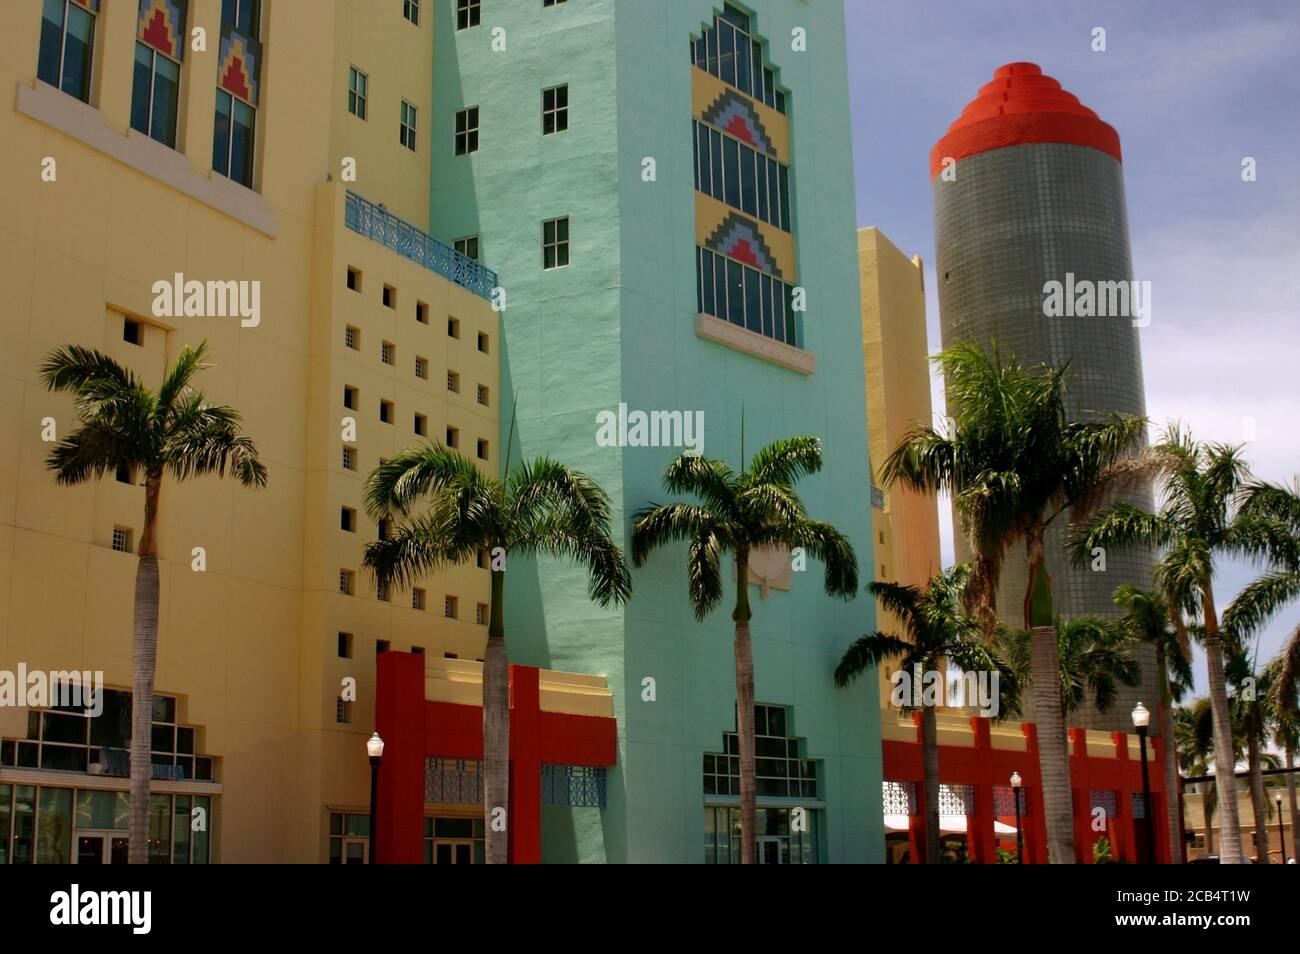 A street scene in south beach, Miami, FL/ Stock Photo